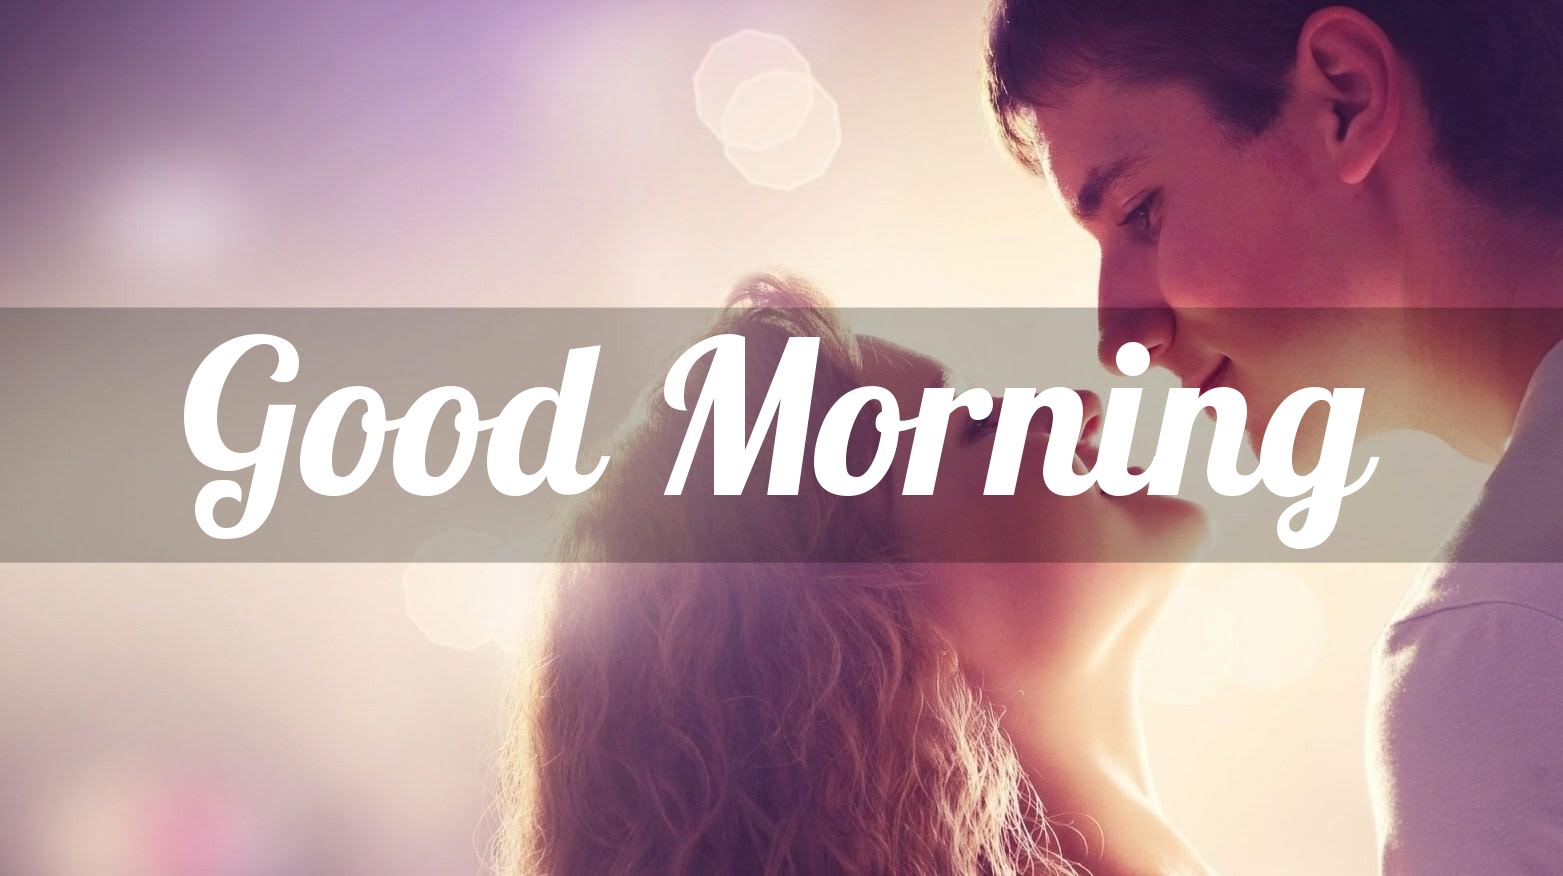 Love Romance Love Good Morning (#2356656) - HD Wallpaper & Backgrounds ...